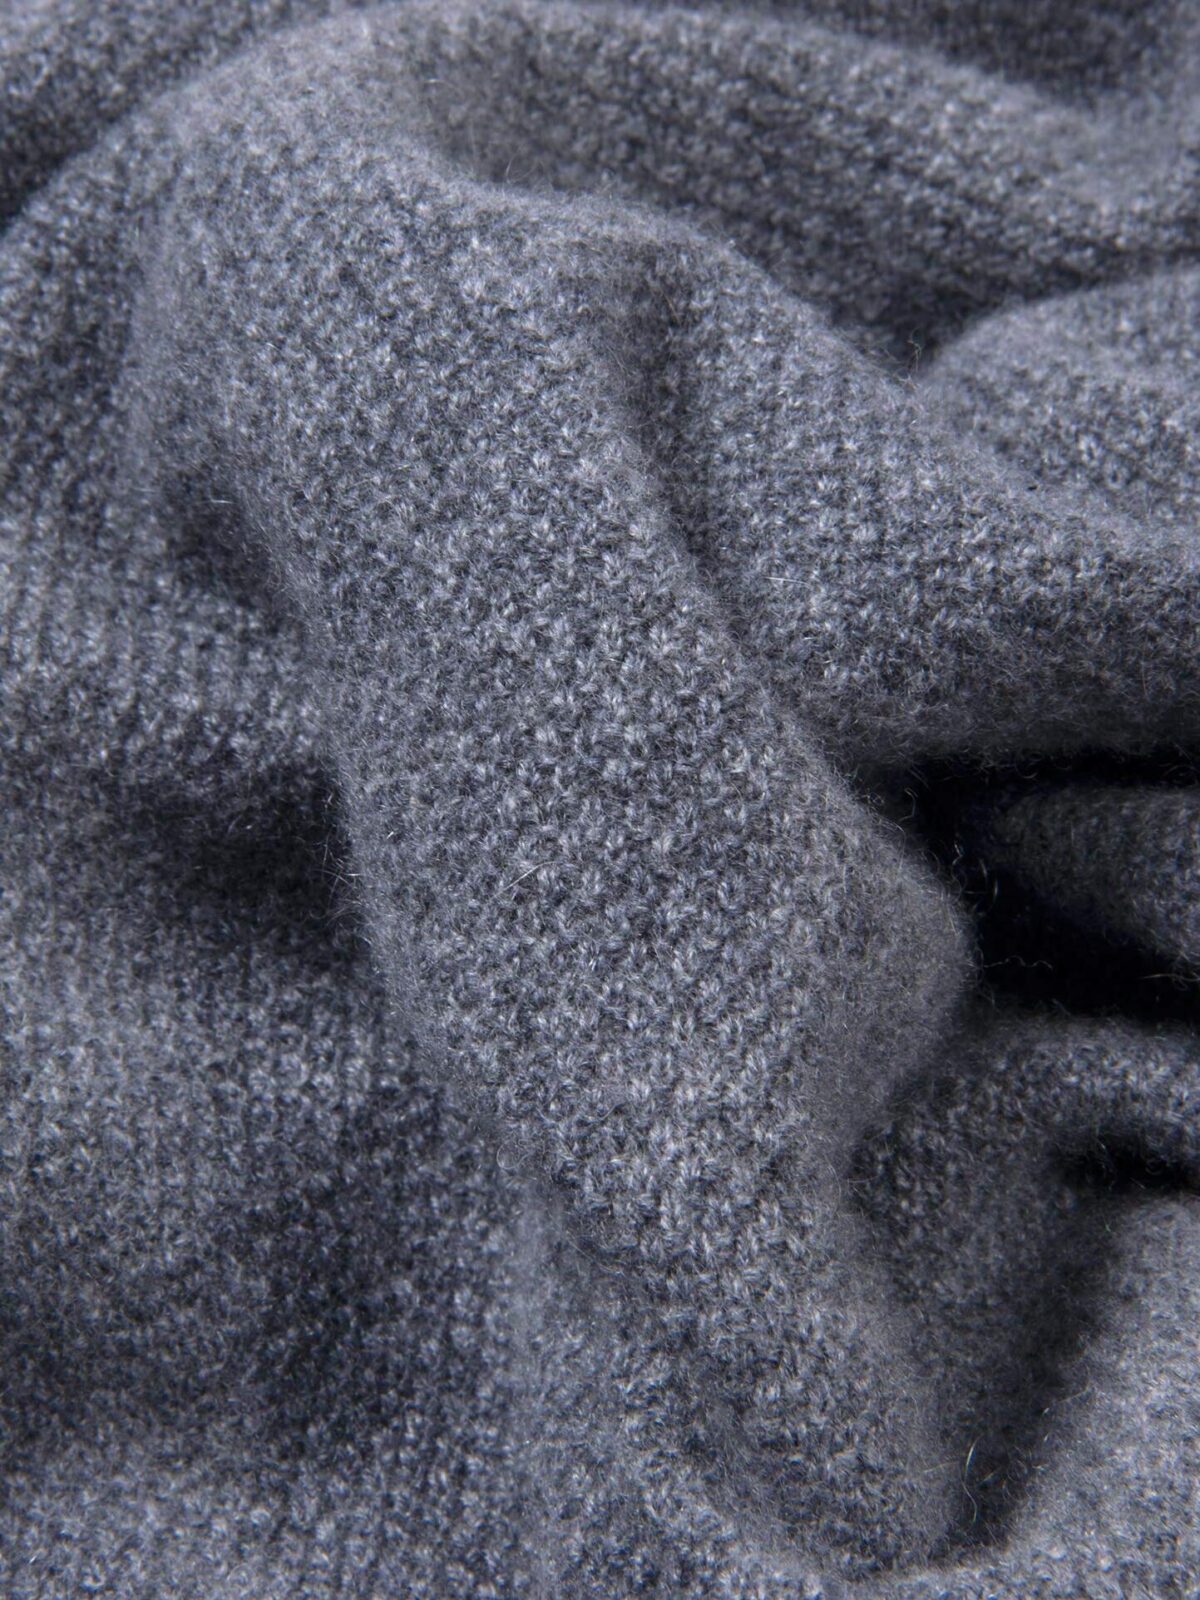 Grey Cobble Stitch Cashmere Sweater by Proper Cloth